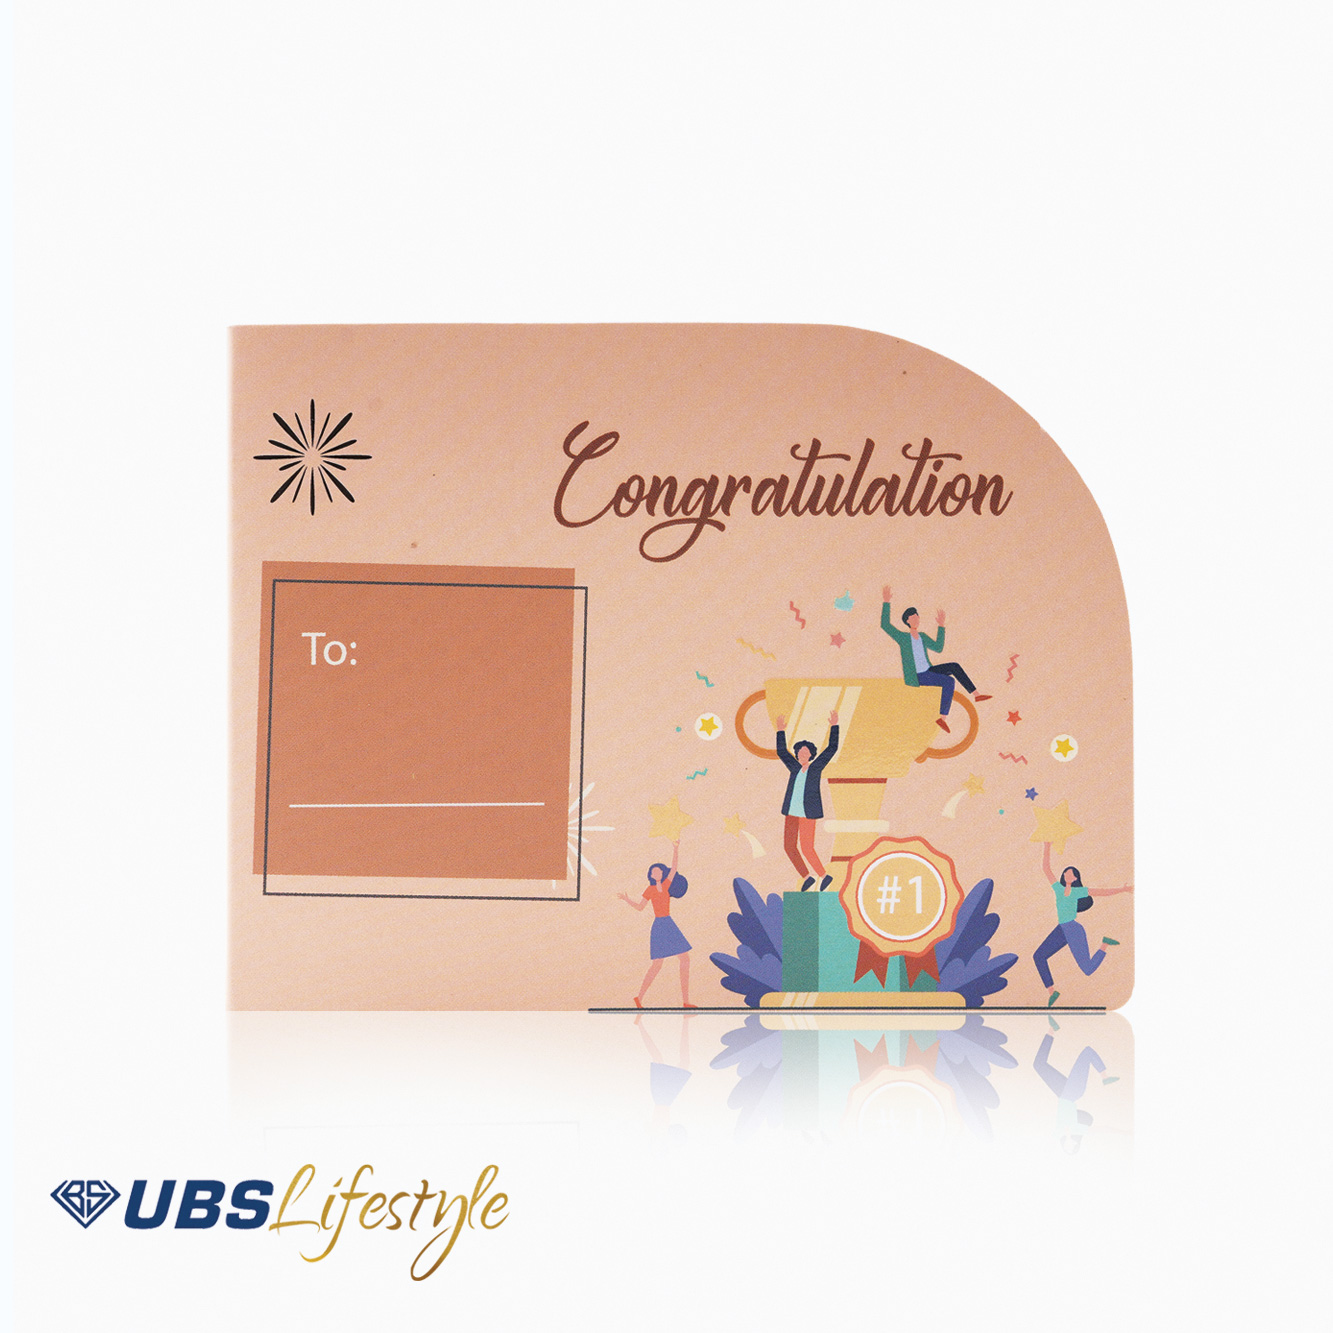 Kartu Ucapan UBS Lifestyle Edisi Congratulation - Yakkk0478